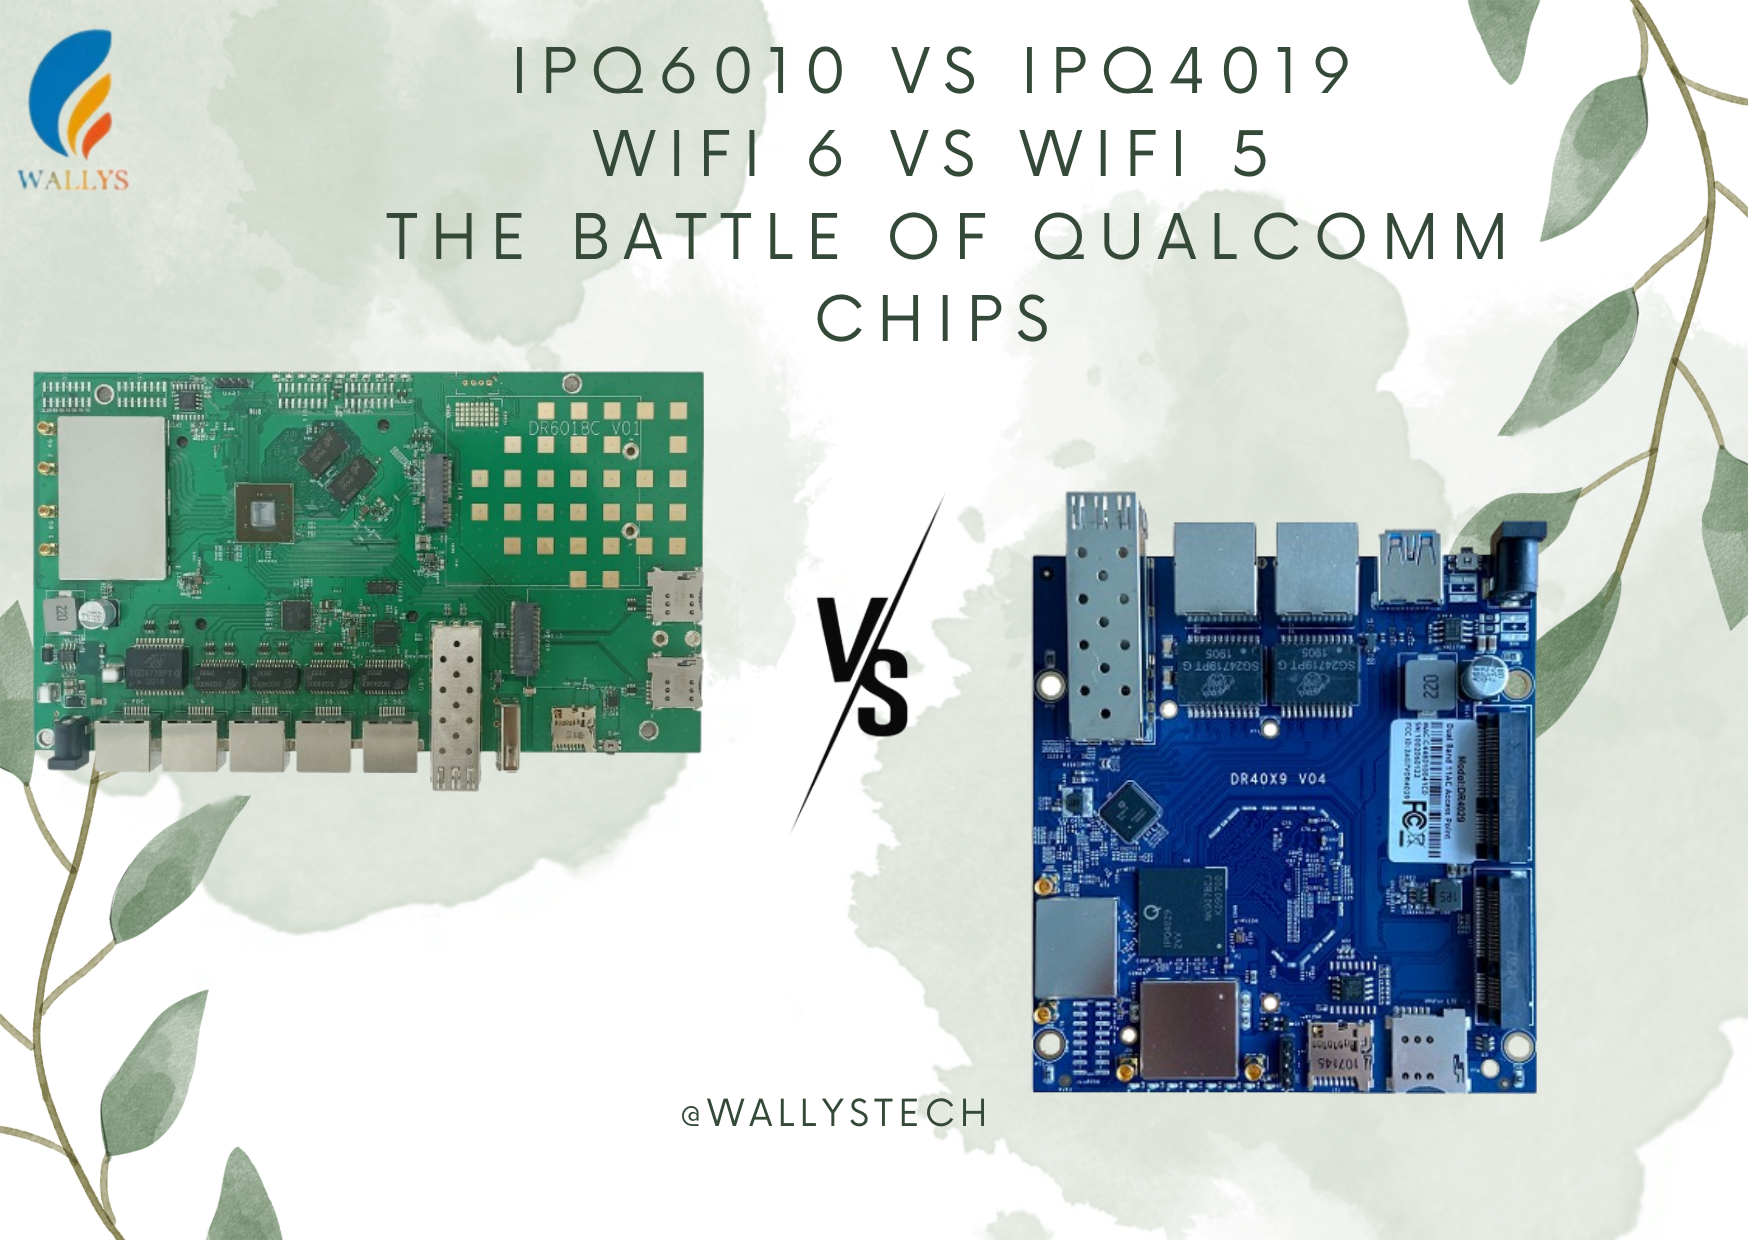 IPQ6010 vs. IPQ4019: The battle of Qualcomm chips and WIFI 6 vs WIFI 5